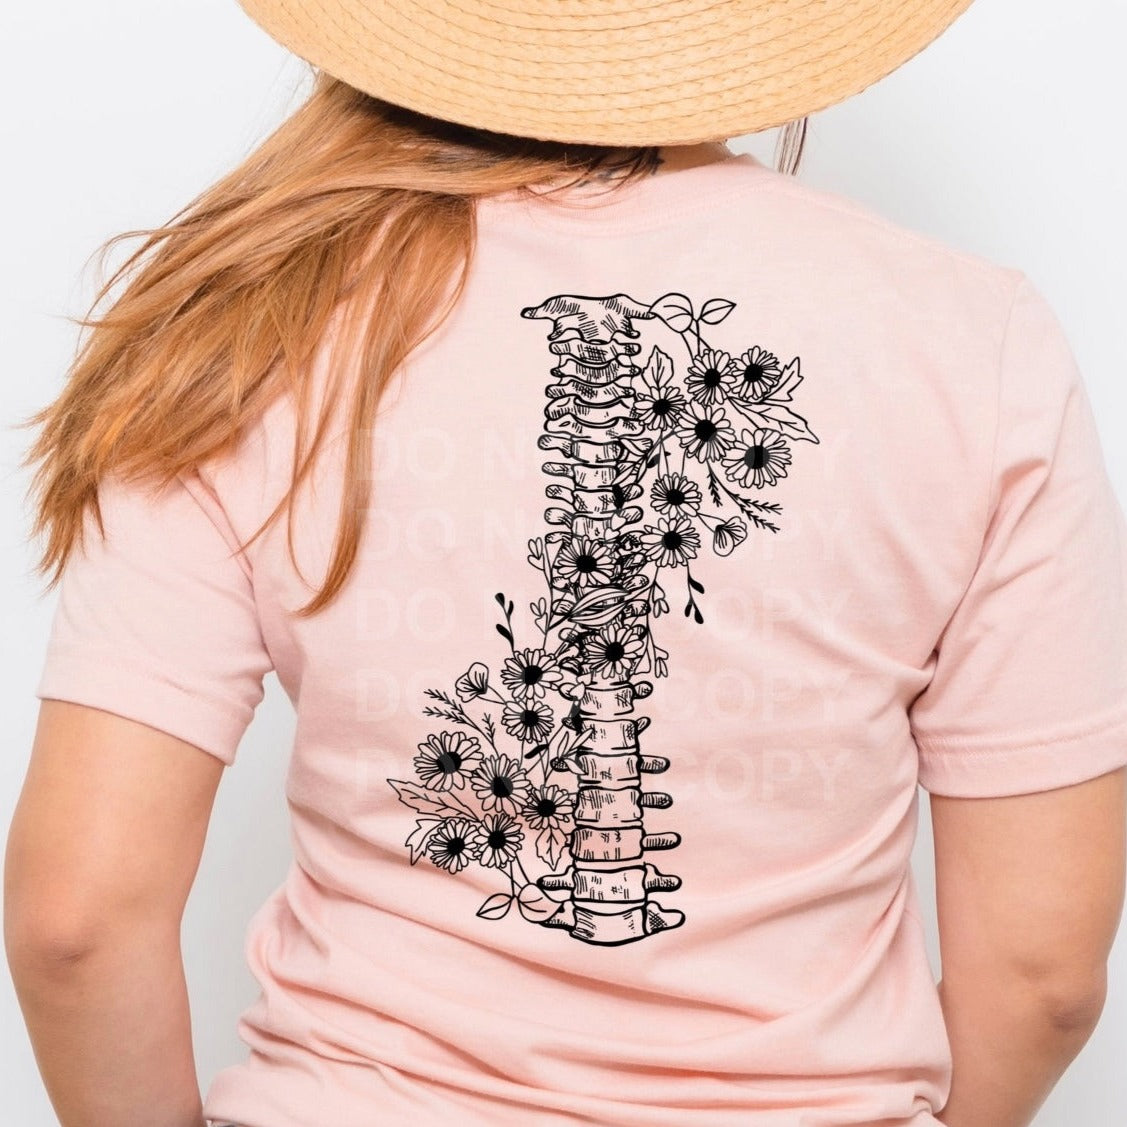 Floral Spine Graphic Tee or Sweatshirt - Bella Lia Boutique